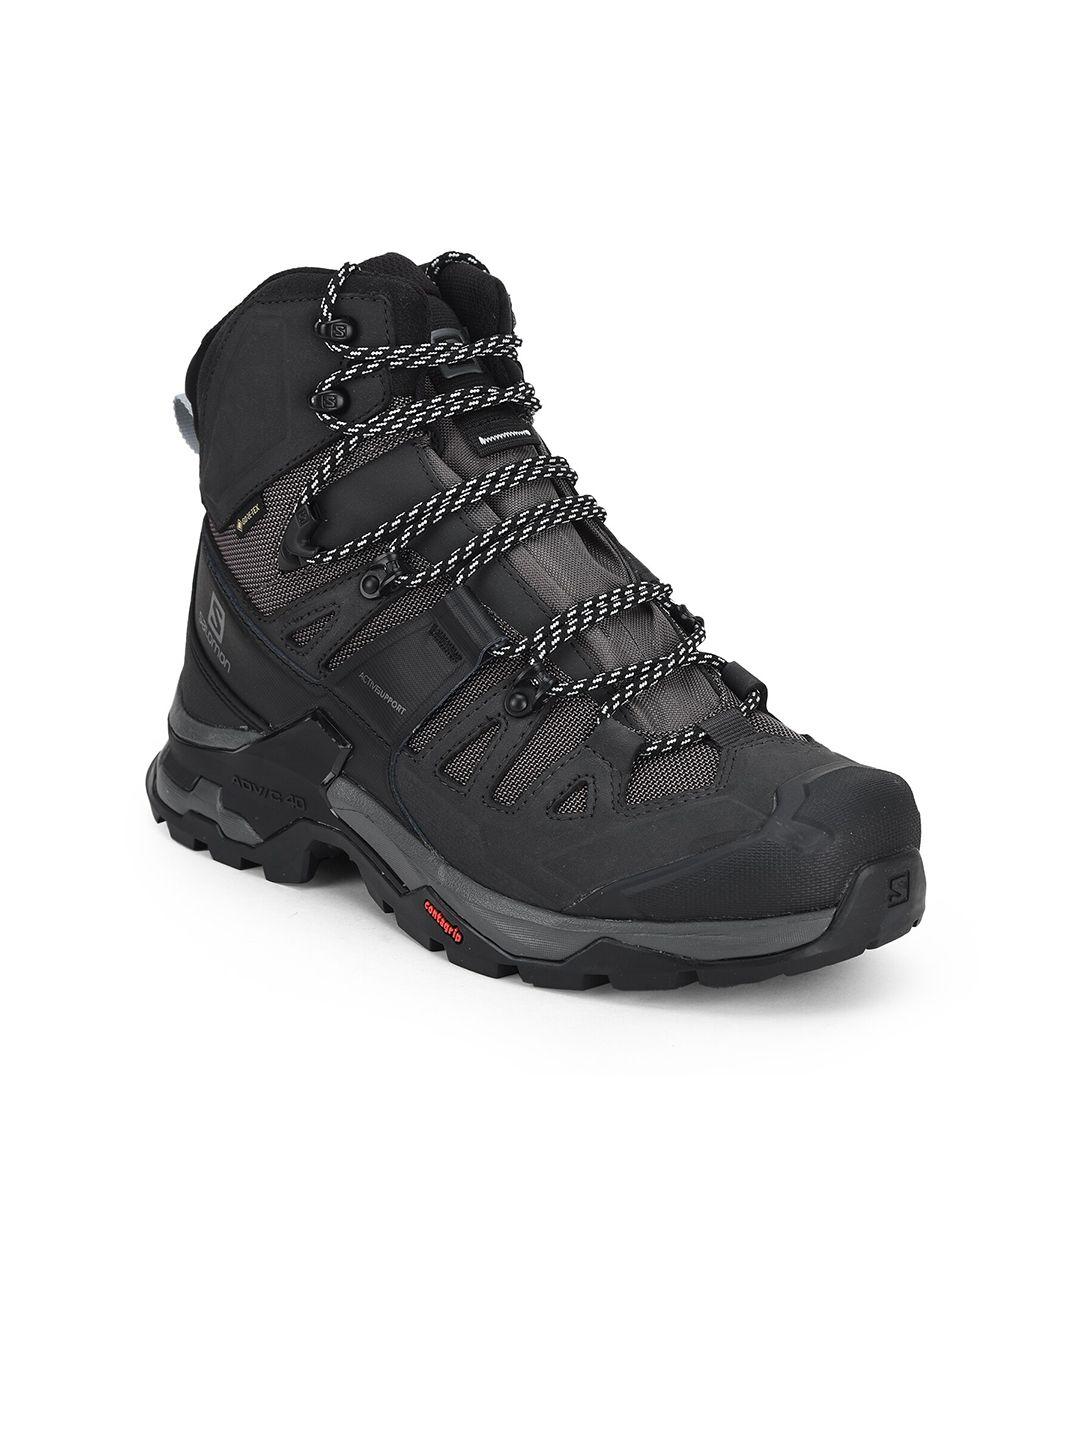 Salomon Men Black Leather Trekking Shoes